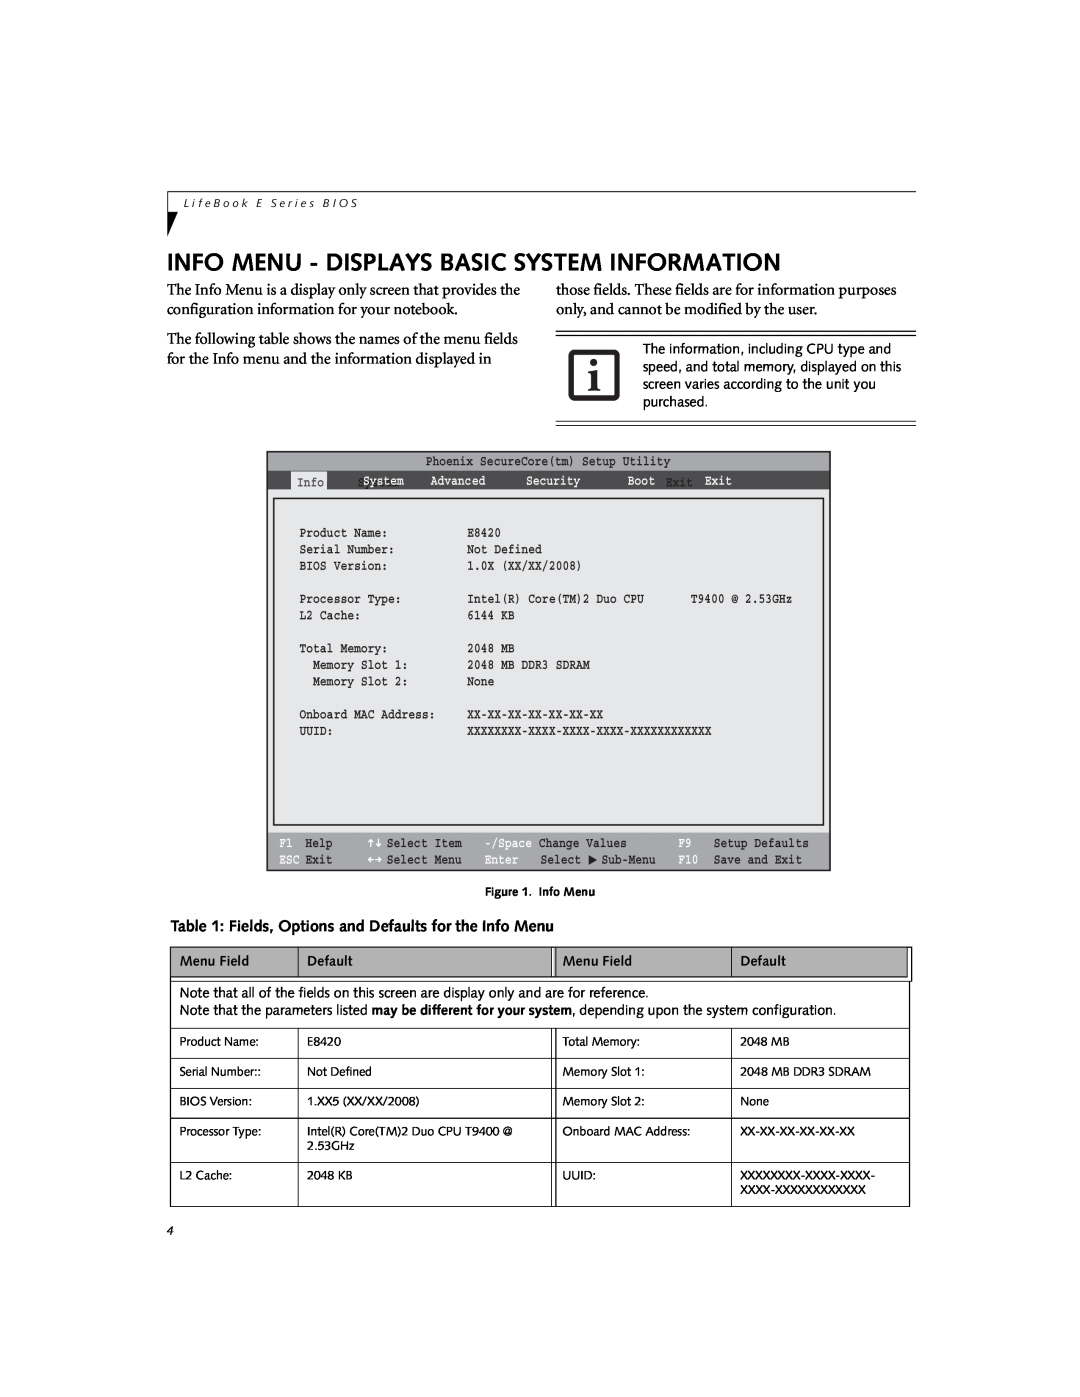 Fujitsu Siemens Computers E8420 manual Info Menu - Displays Basic System Information 